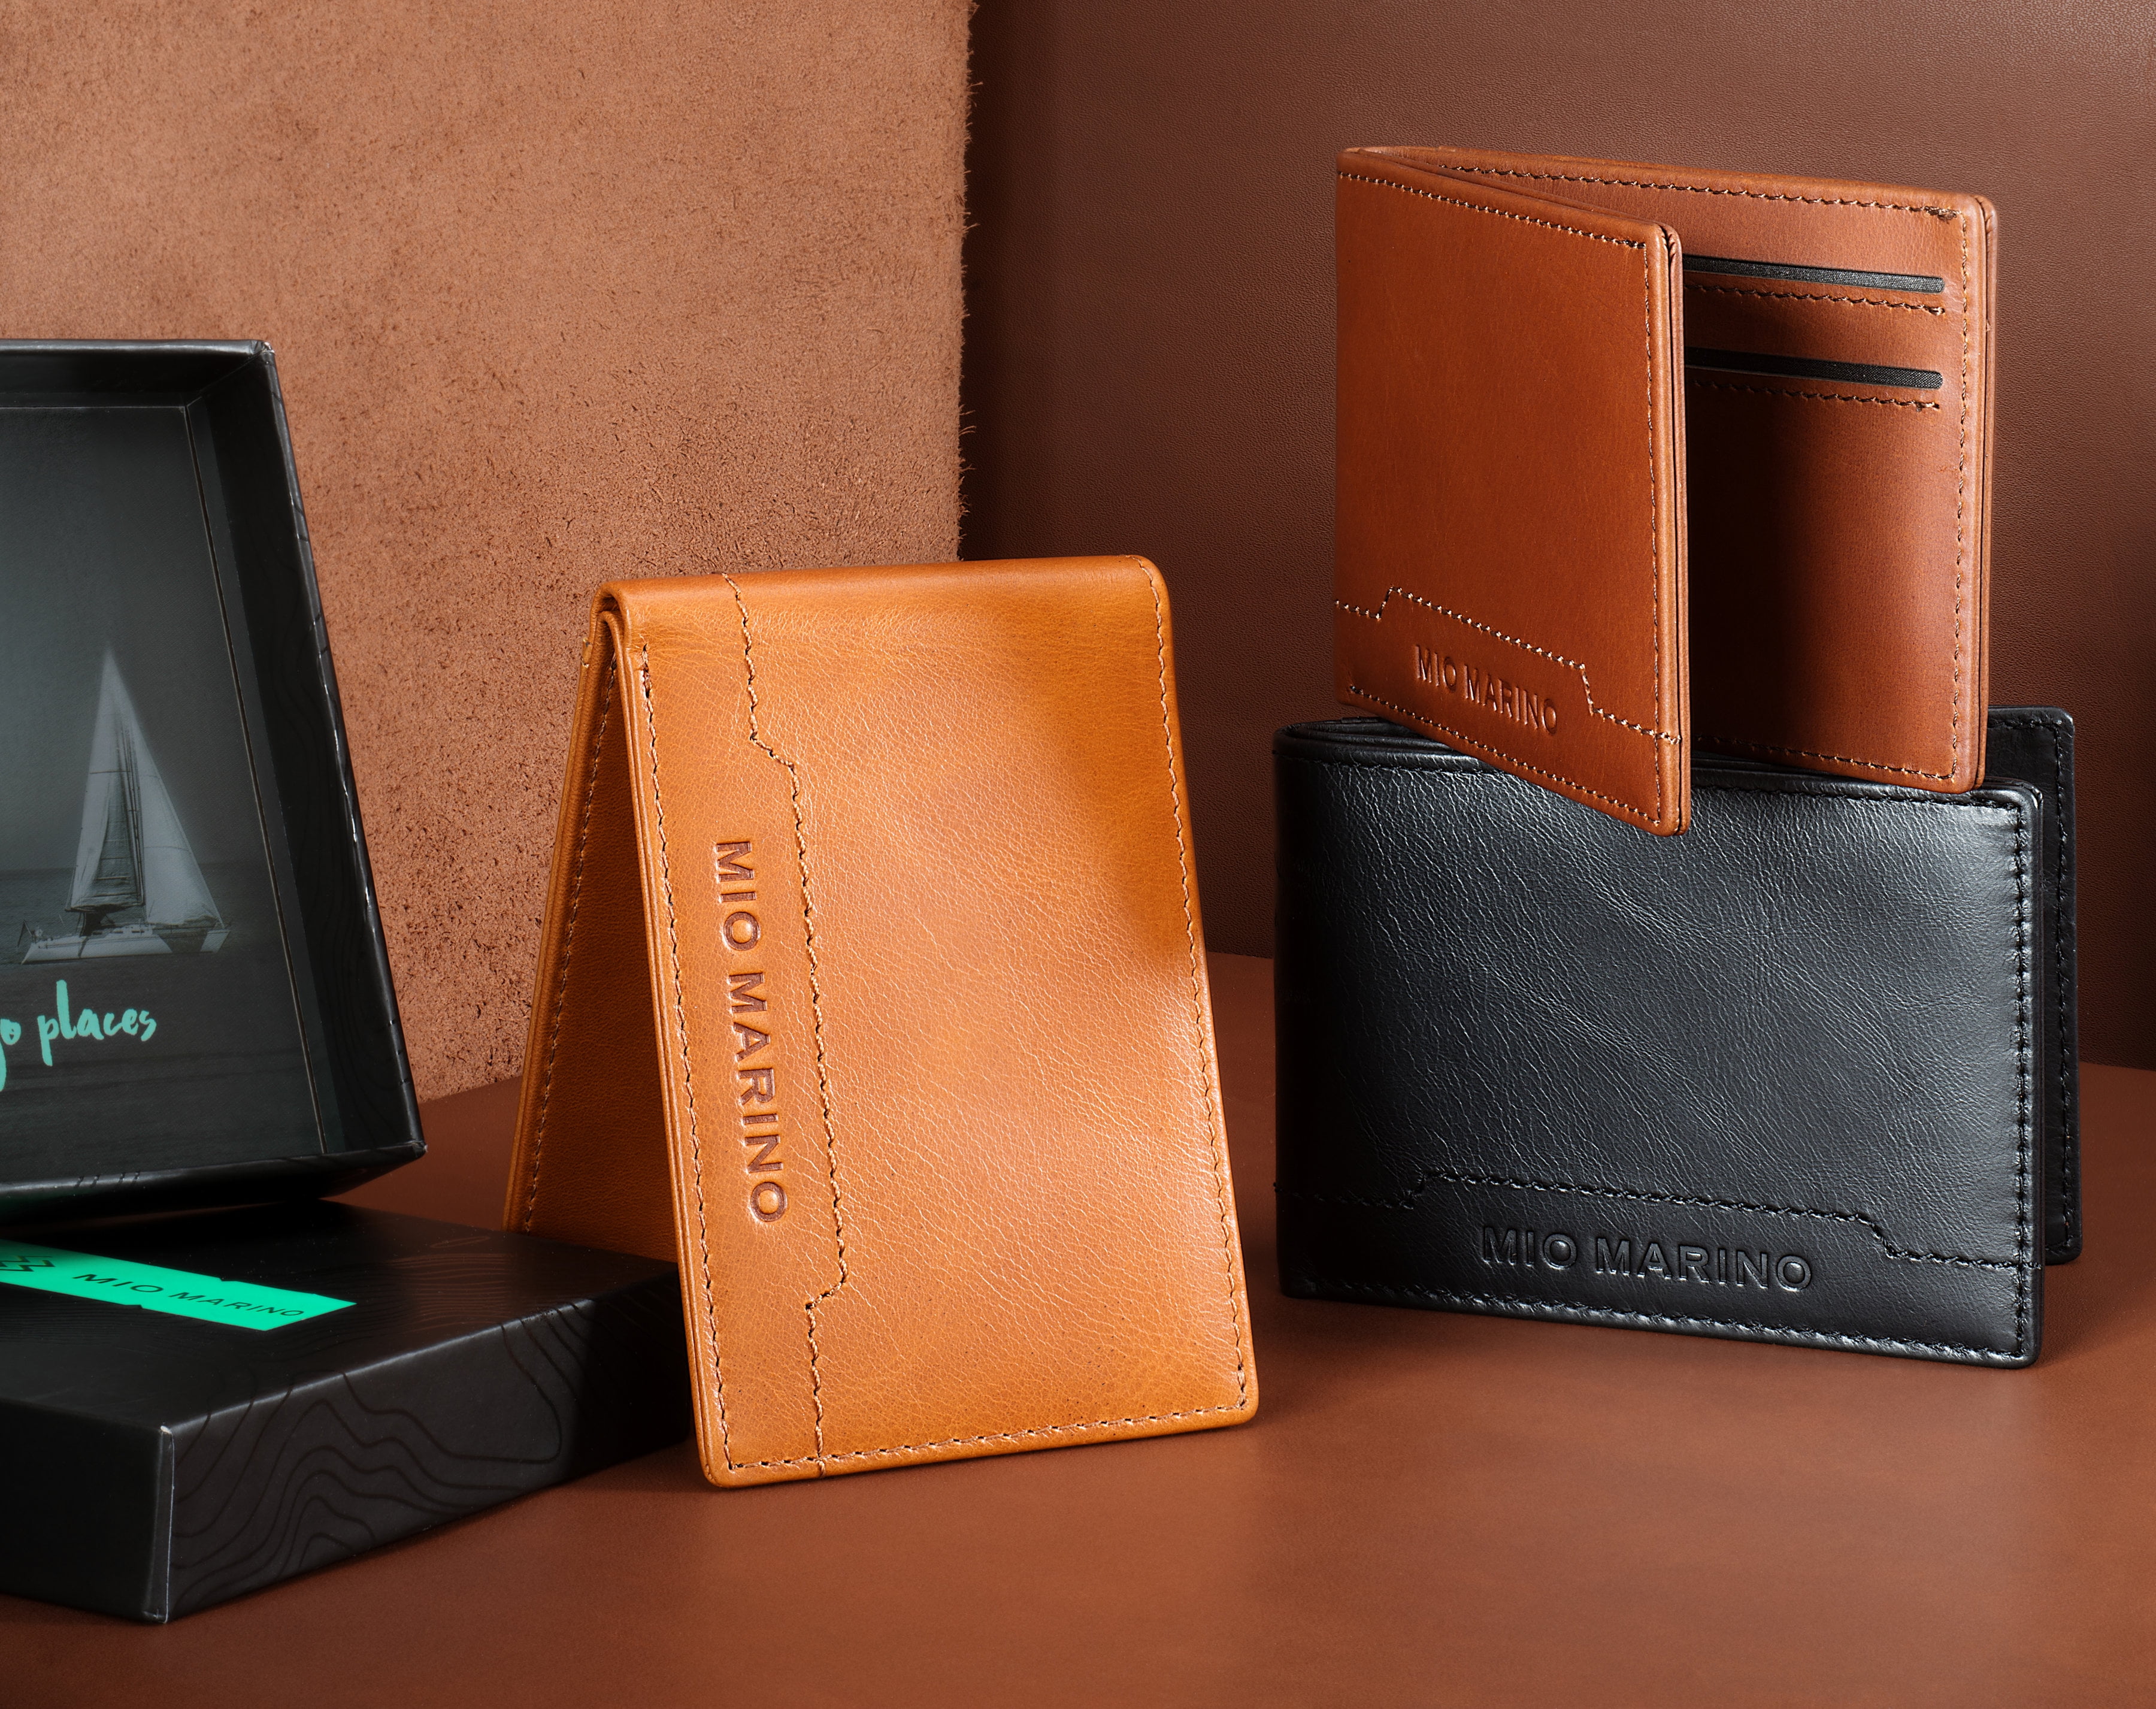 OFAMOUS Men's Leather Wallet with Coin Pocket Flip Up ID Window RFID  Blocking Slim Bifold Credit Card Front Pocket Wallet (Black)